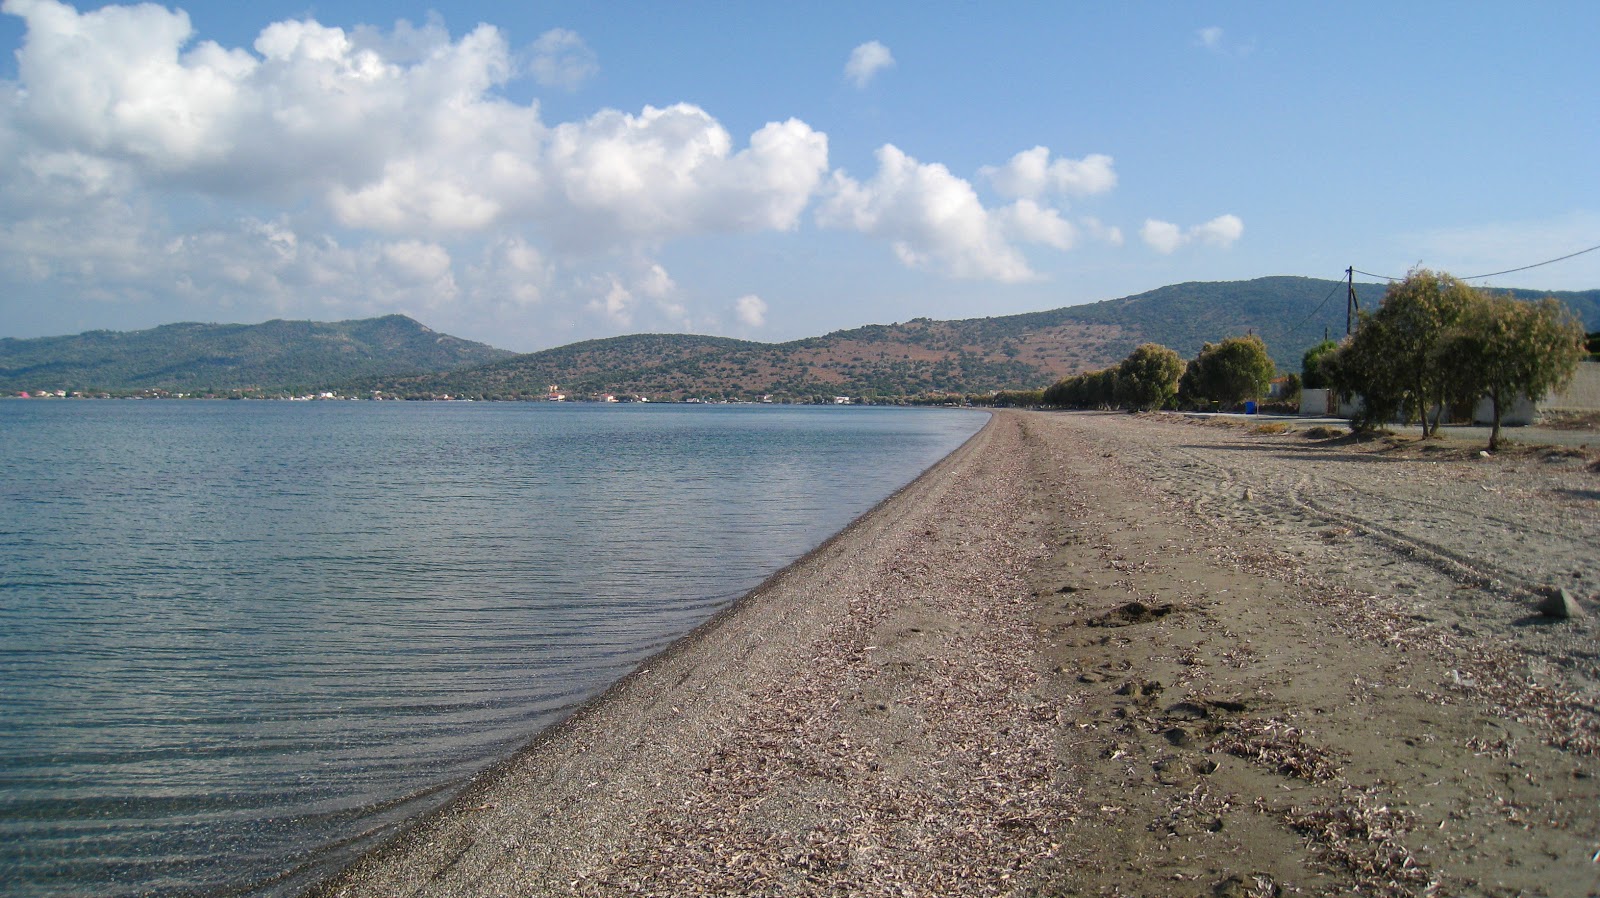 Foto af Nyphida beach faciliteter område